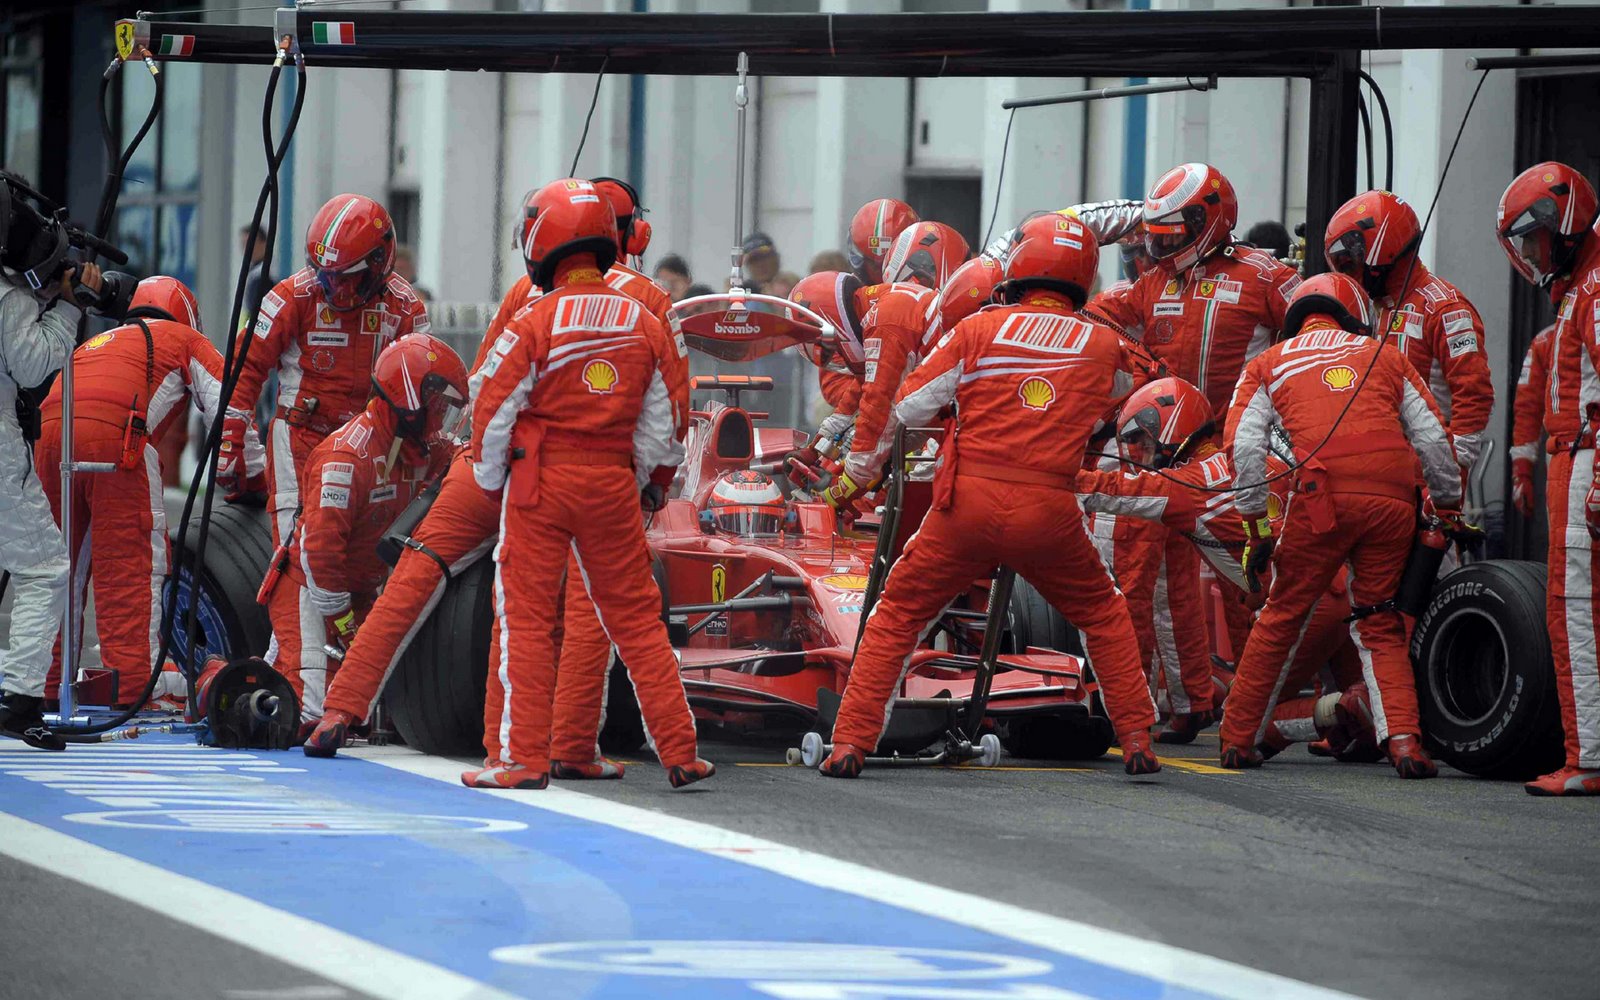 [Kimi+Räikkönen+Ferrari+Sunday+Race+in+France+Magny+Cours,+F1+2008+90.jpg]